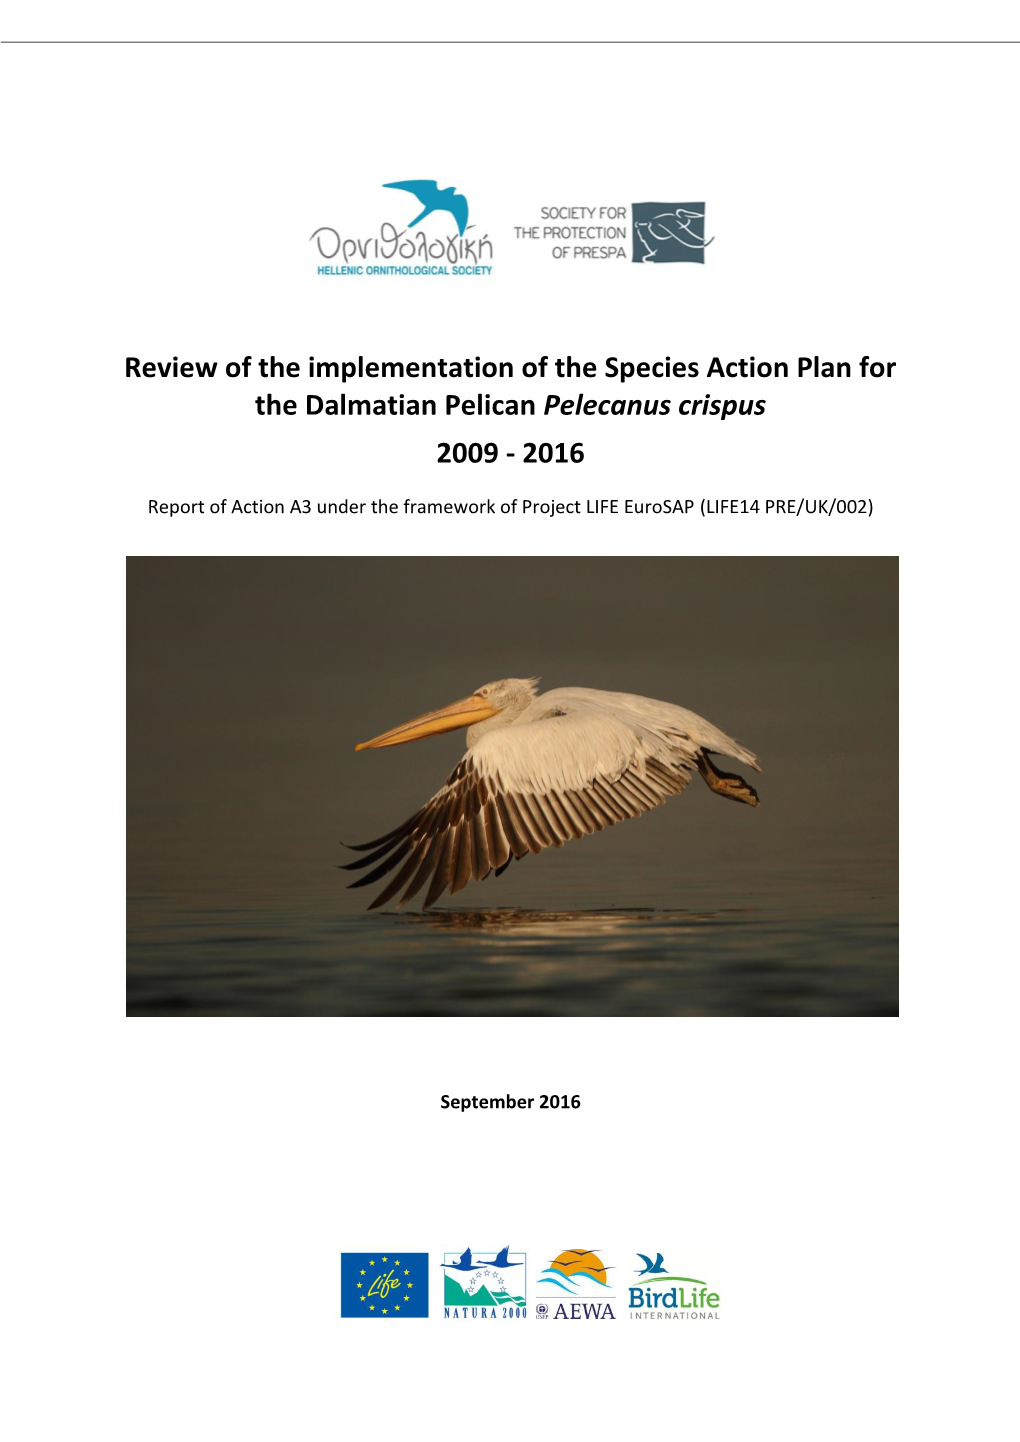 Review of the Implementation of the Species Action Plan for the Dalmatian Pelican Pelecanus Crispus 2009 - 2016